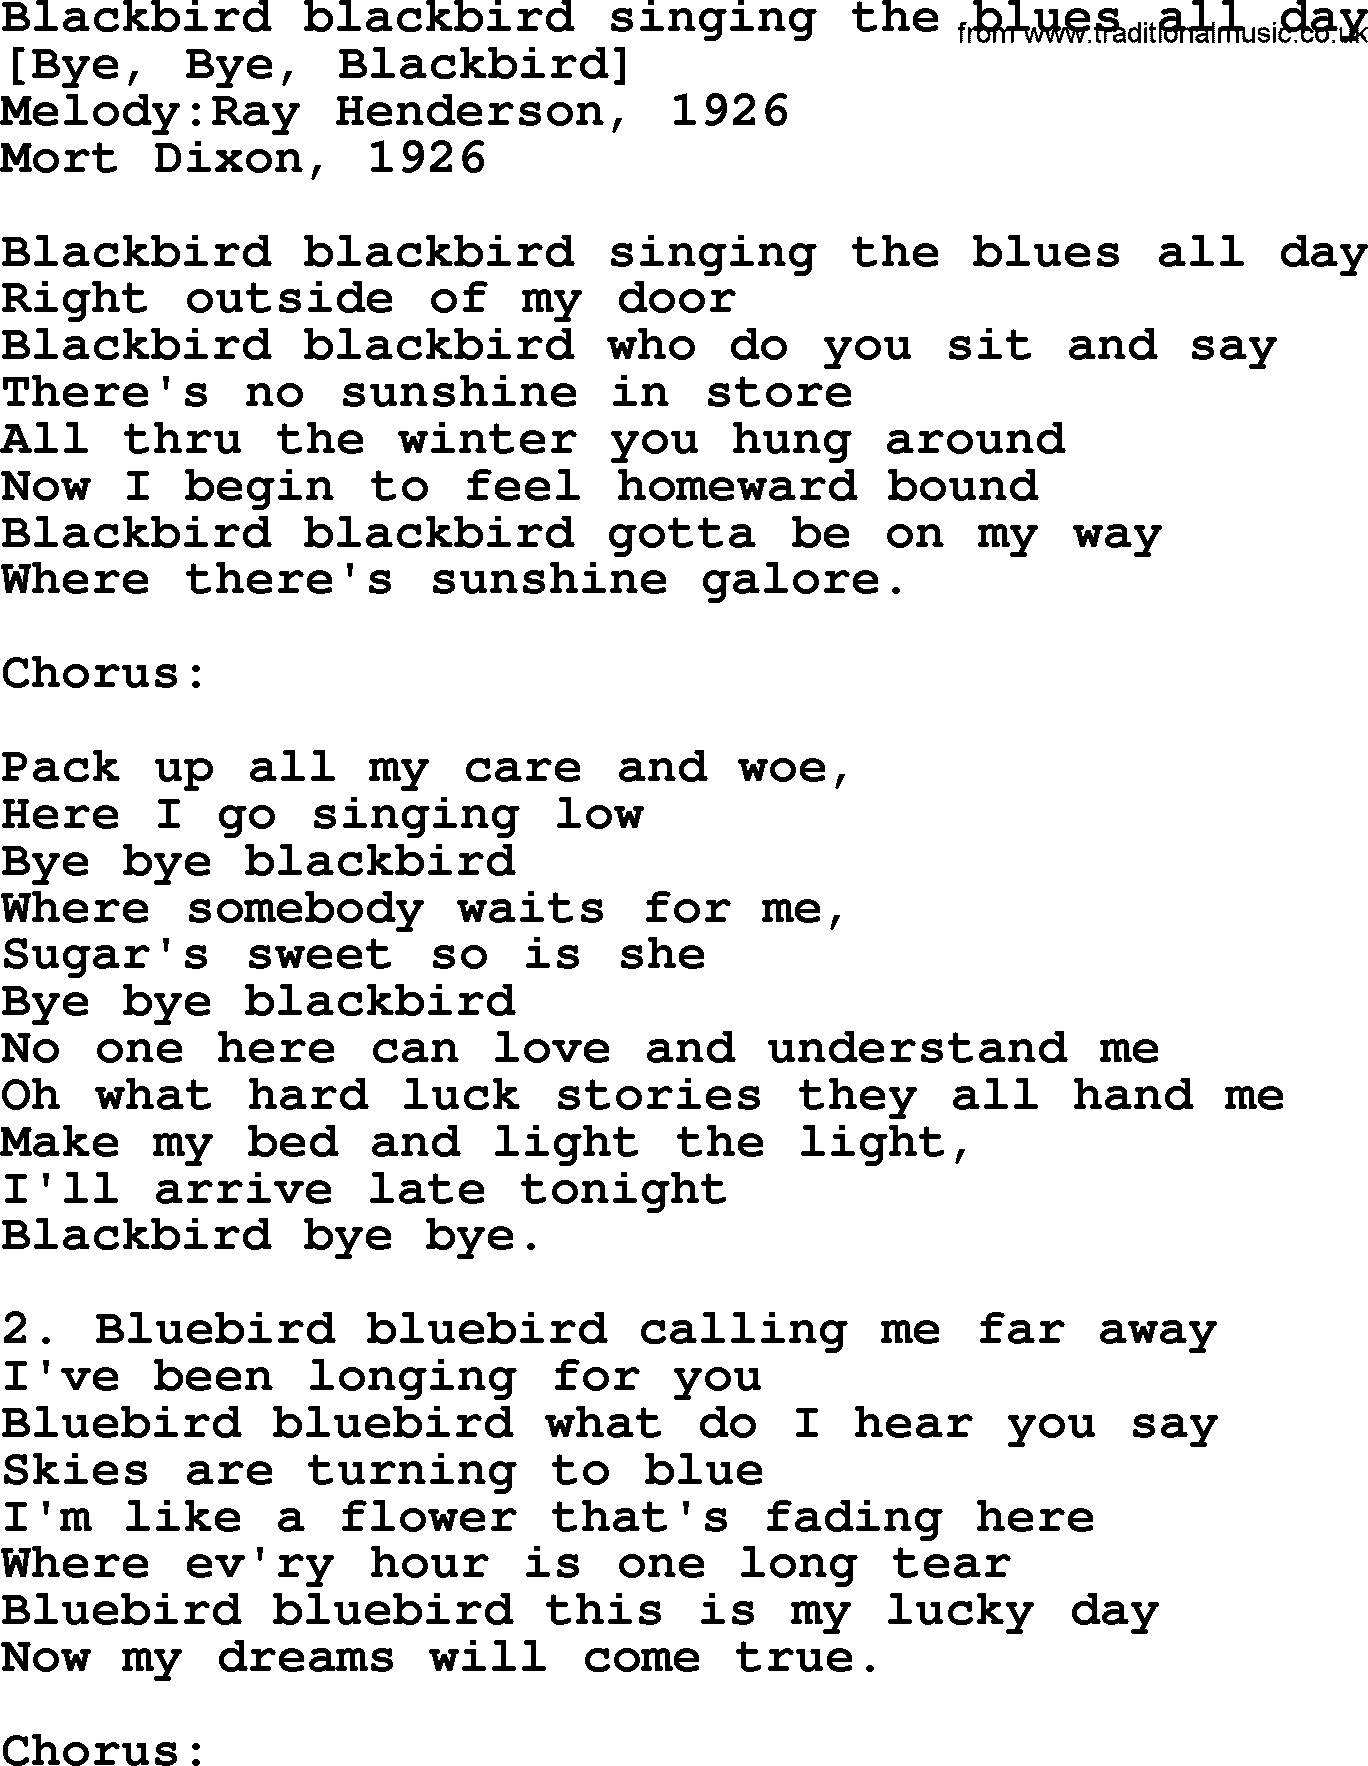 Old American Song: Blackbird Blackbird Singing The Blues All Day, lyrics